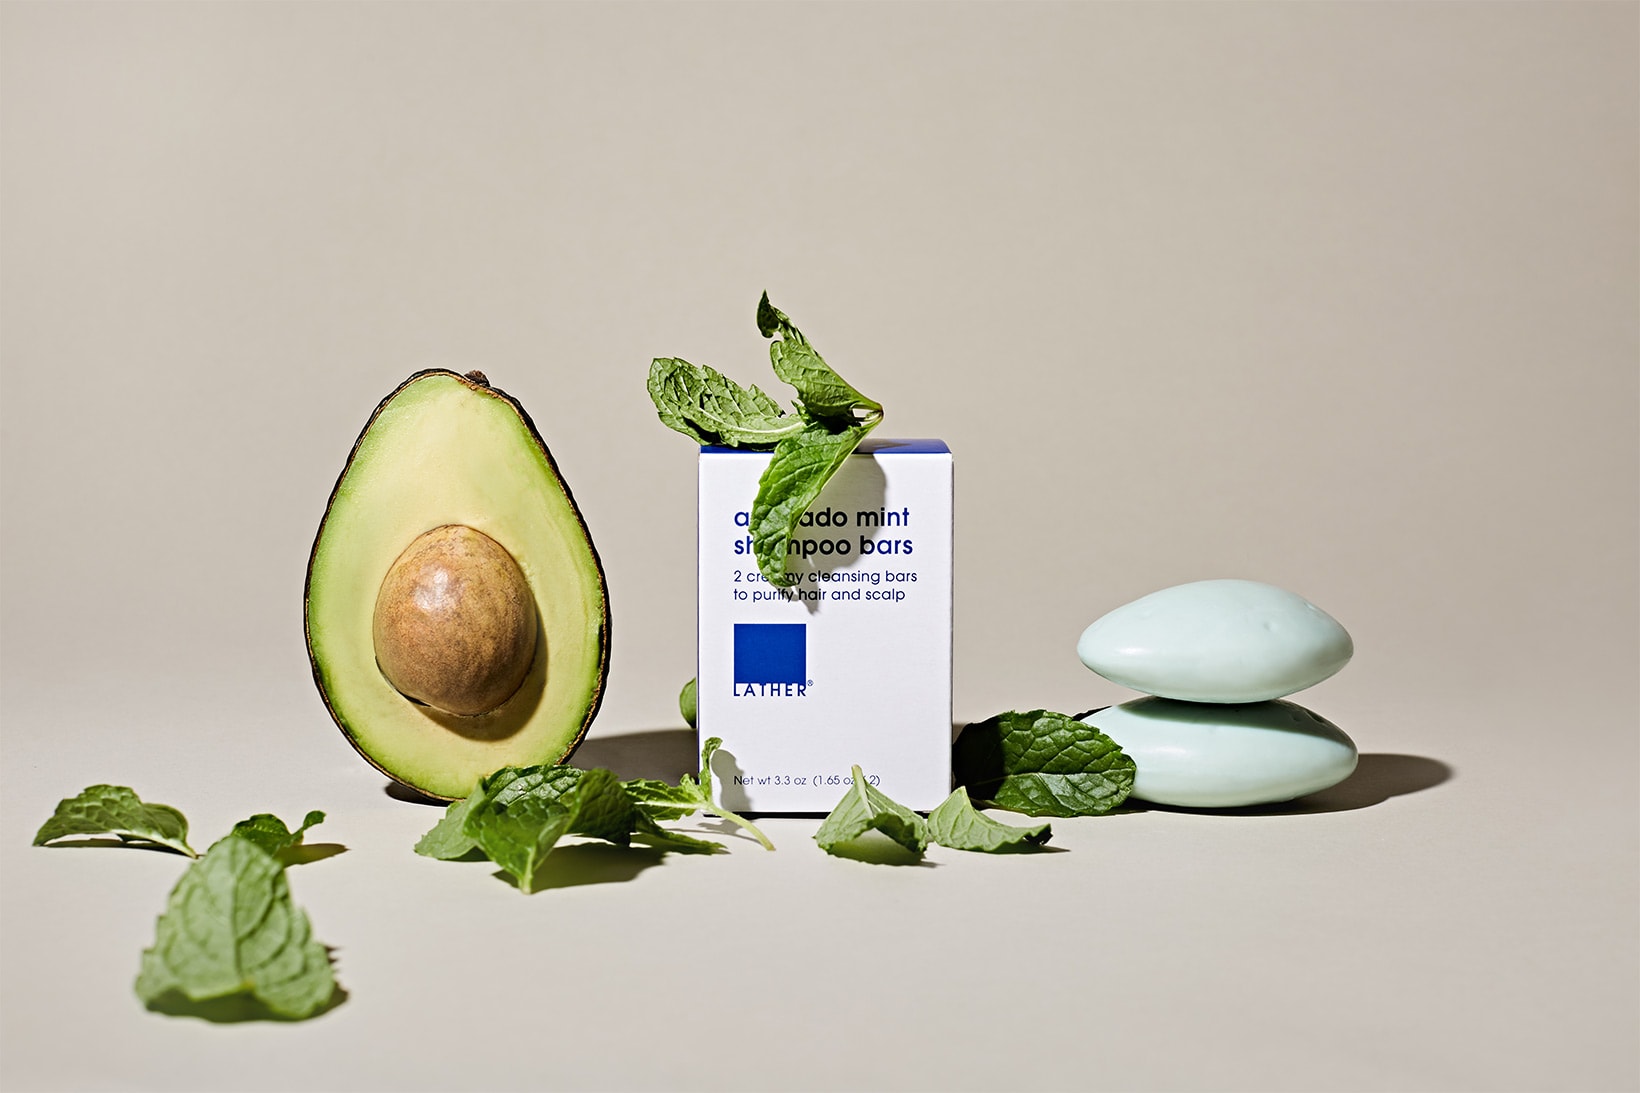 shampoo bar lather eco-friendly sustainable zero plastic waste alternative mint avocado coconut oil haircare